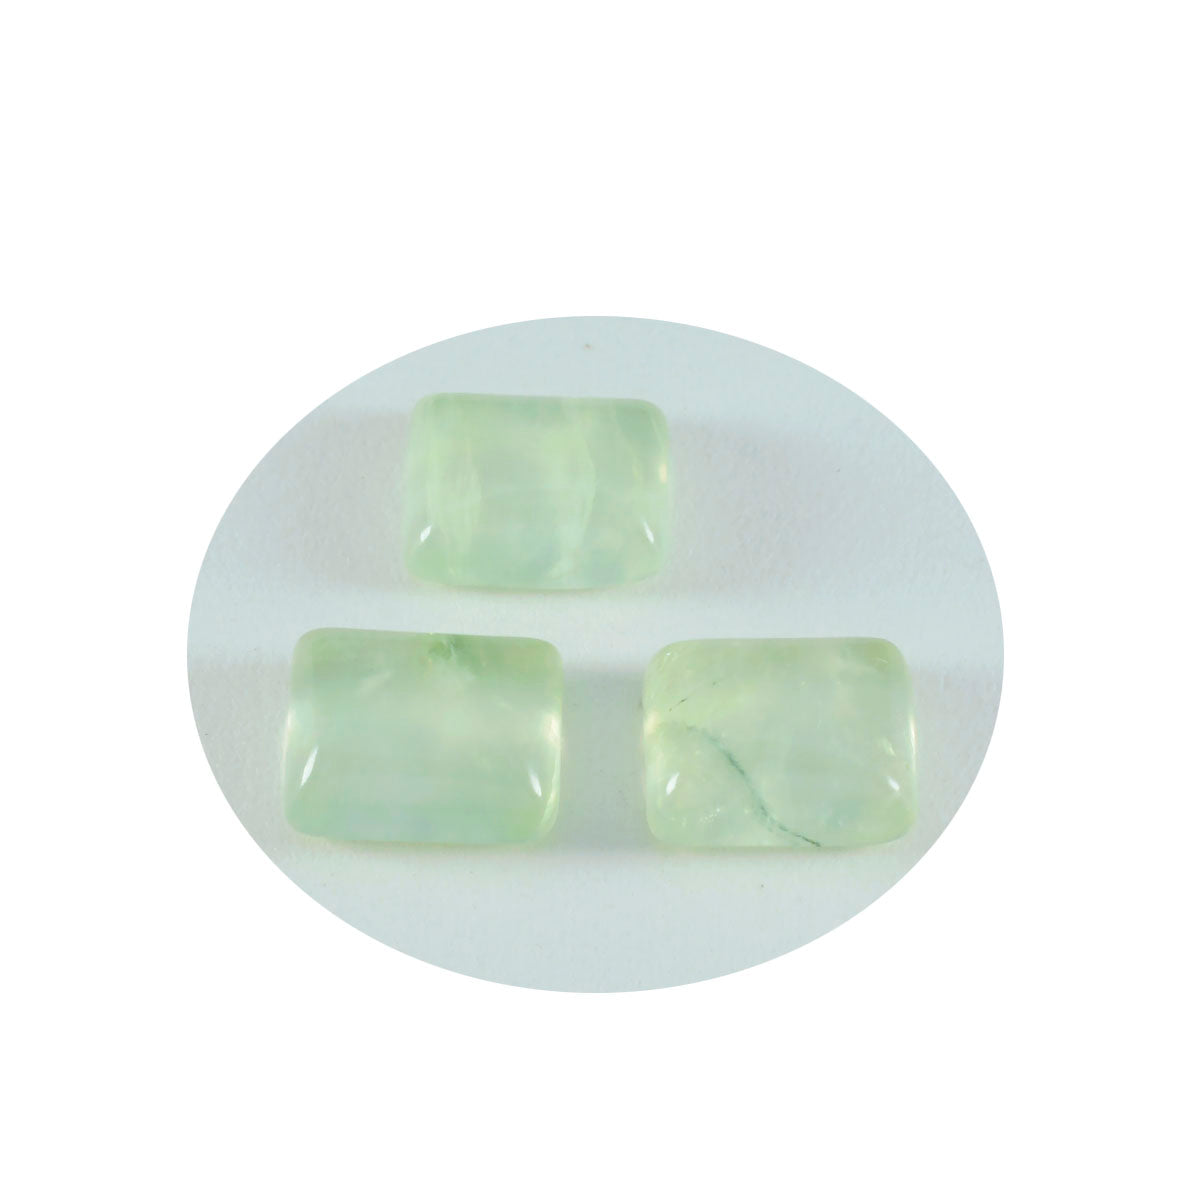 Riyogems 1PC groene prehniet cabochon 9x11 mm achthoekige vorm A+1 kwaliteitssteen